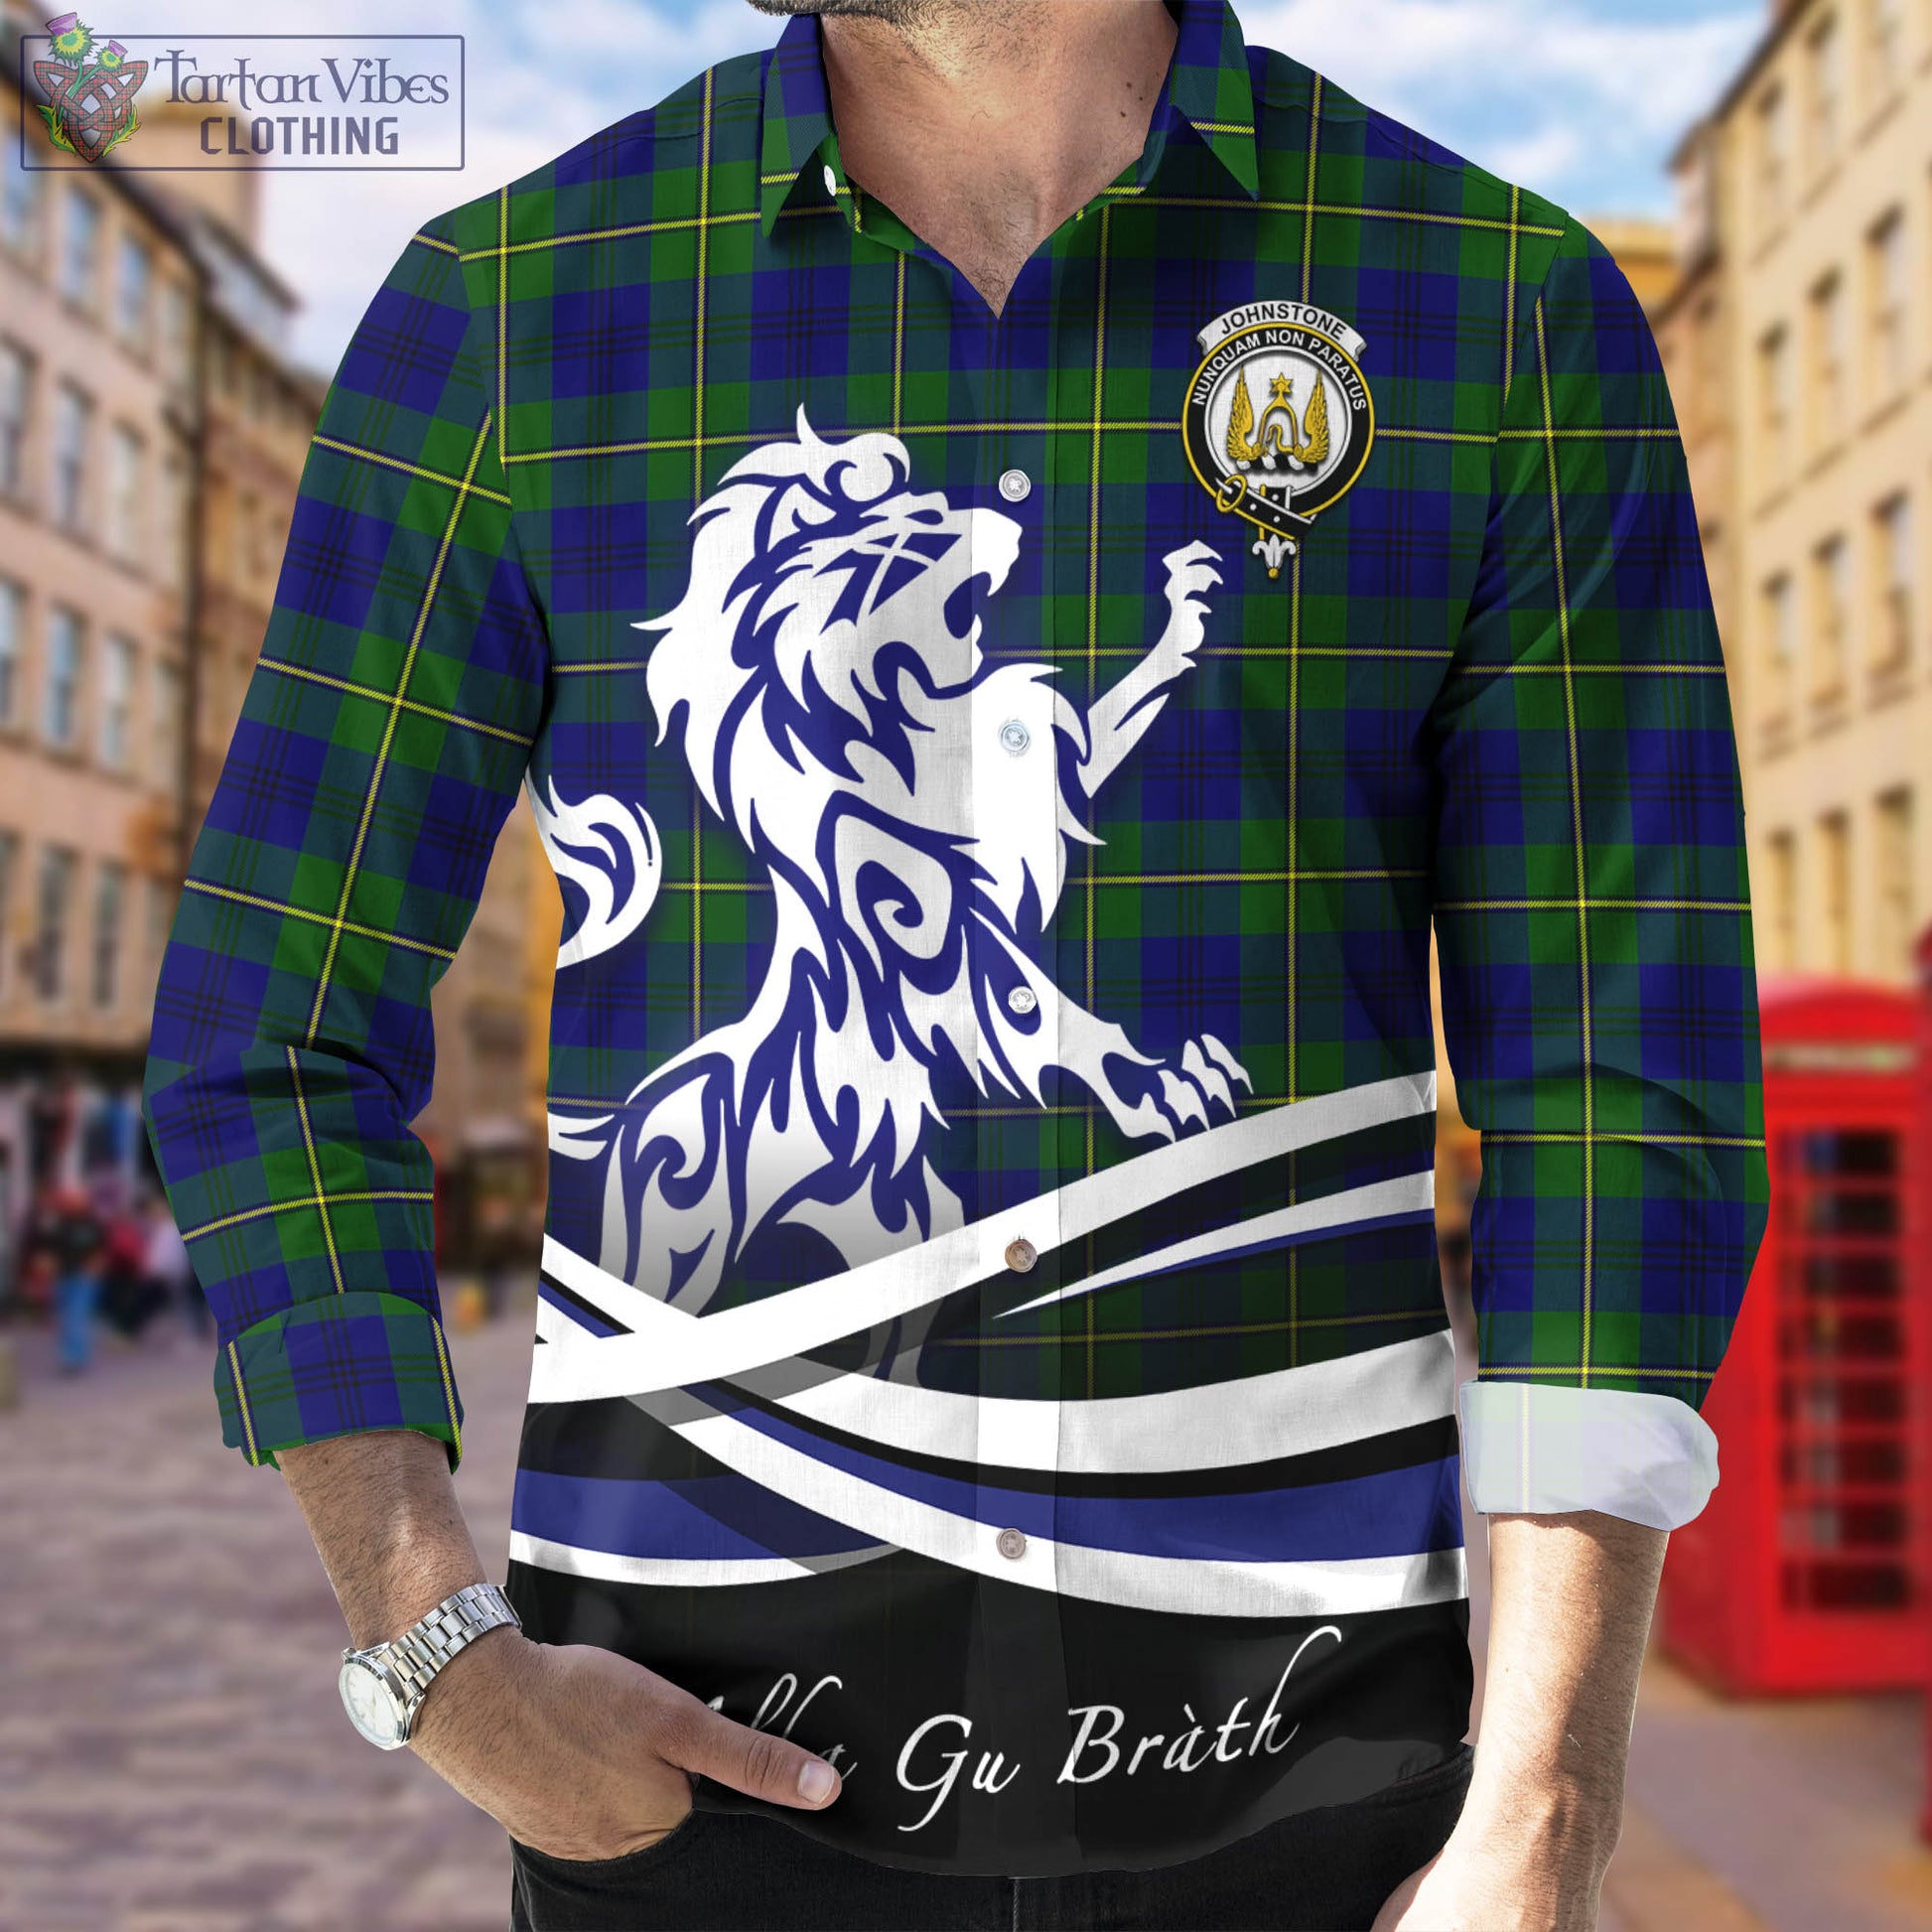 johnstone-johnston-modern-tartan-long-sleeve-button-up-shirt-with-alba-gu-brath-regal-lion-emblem